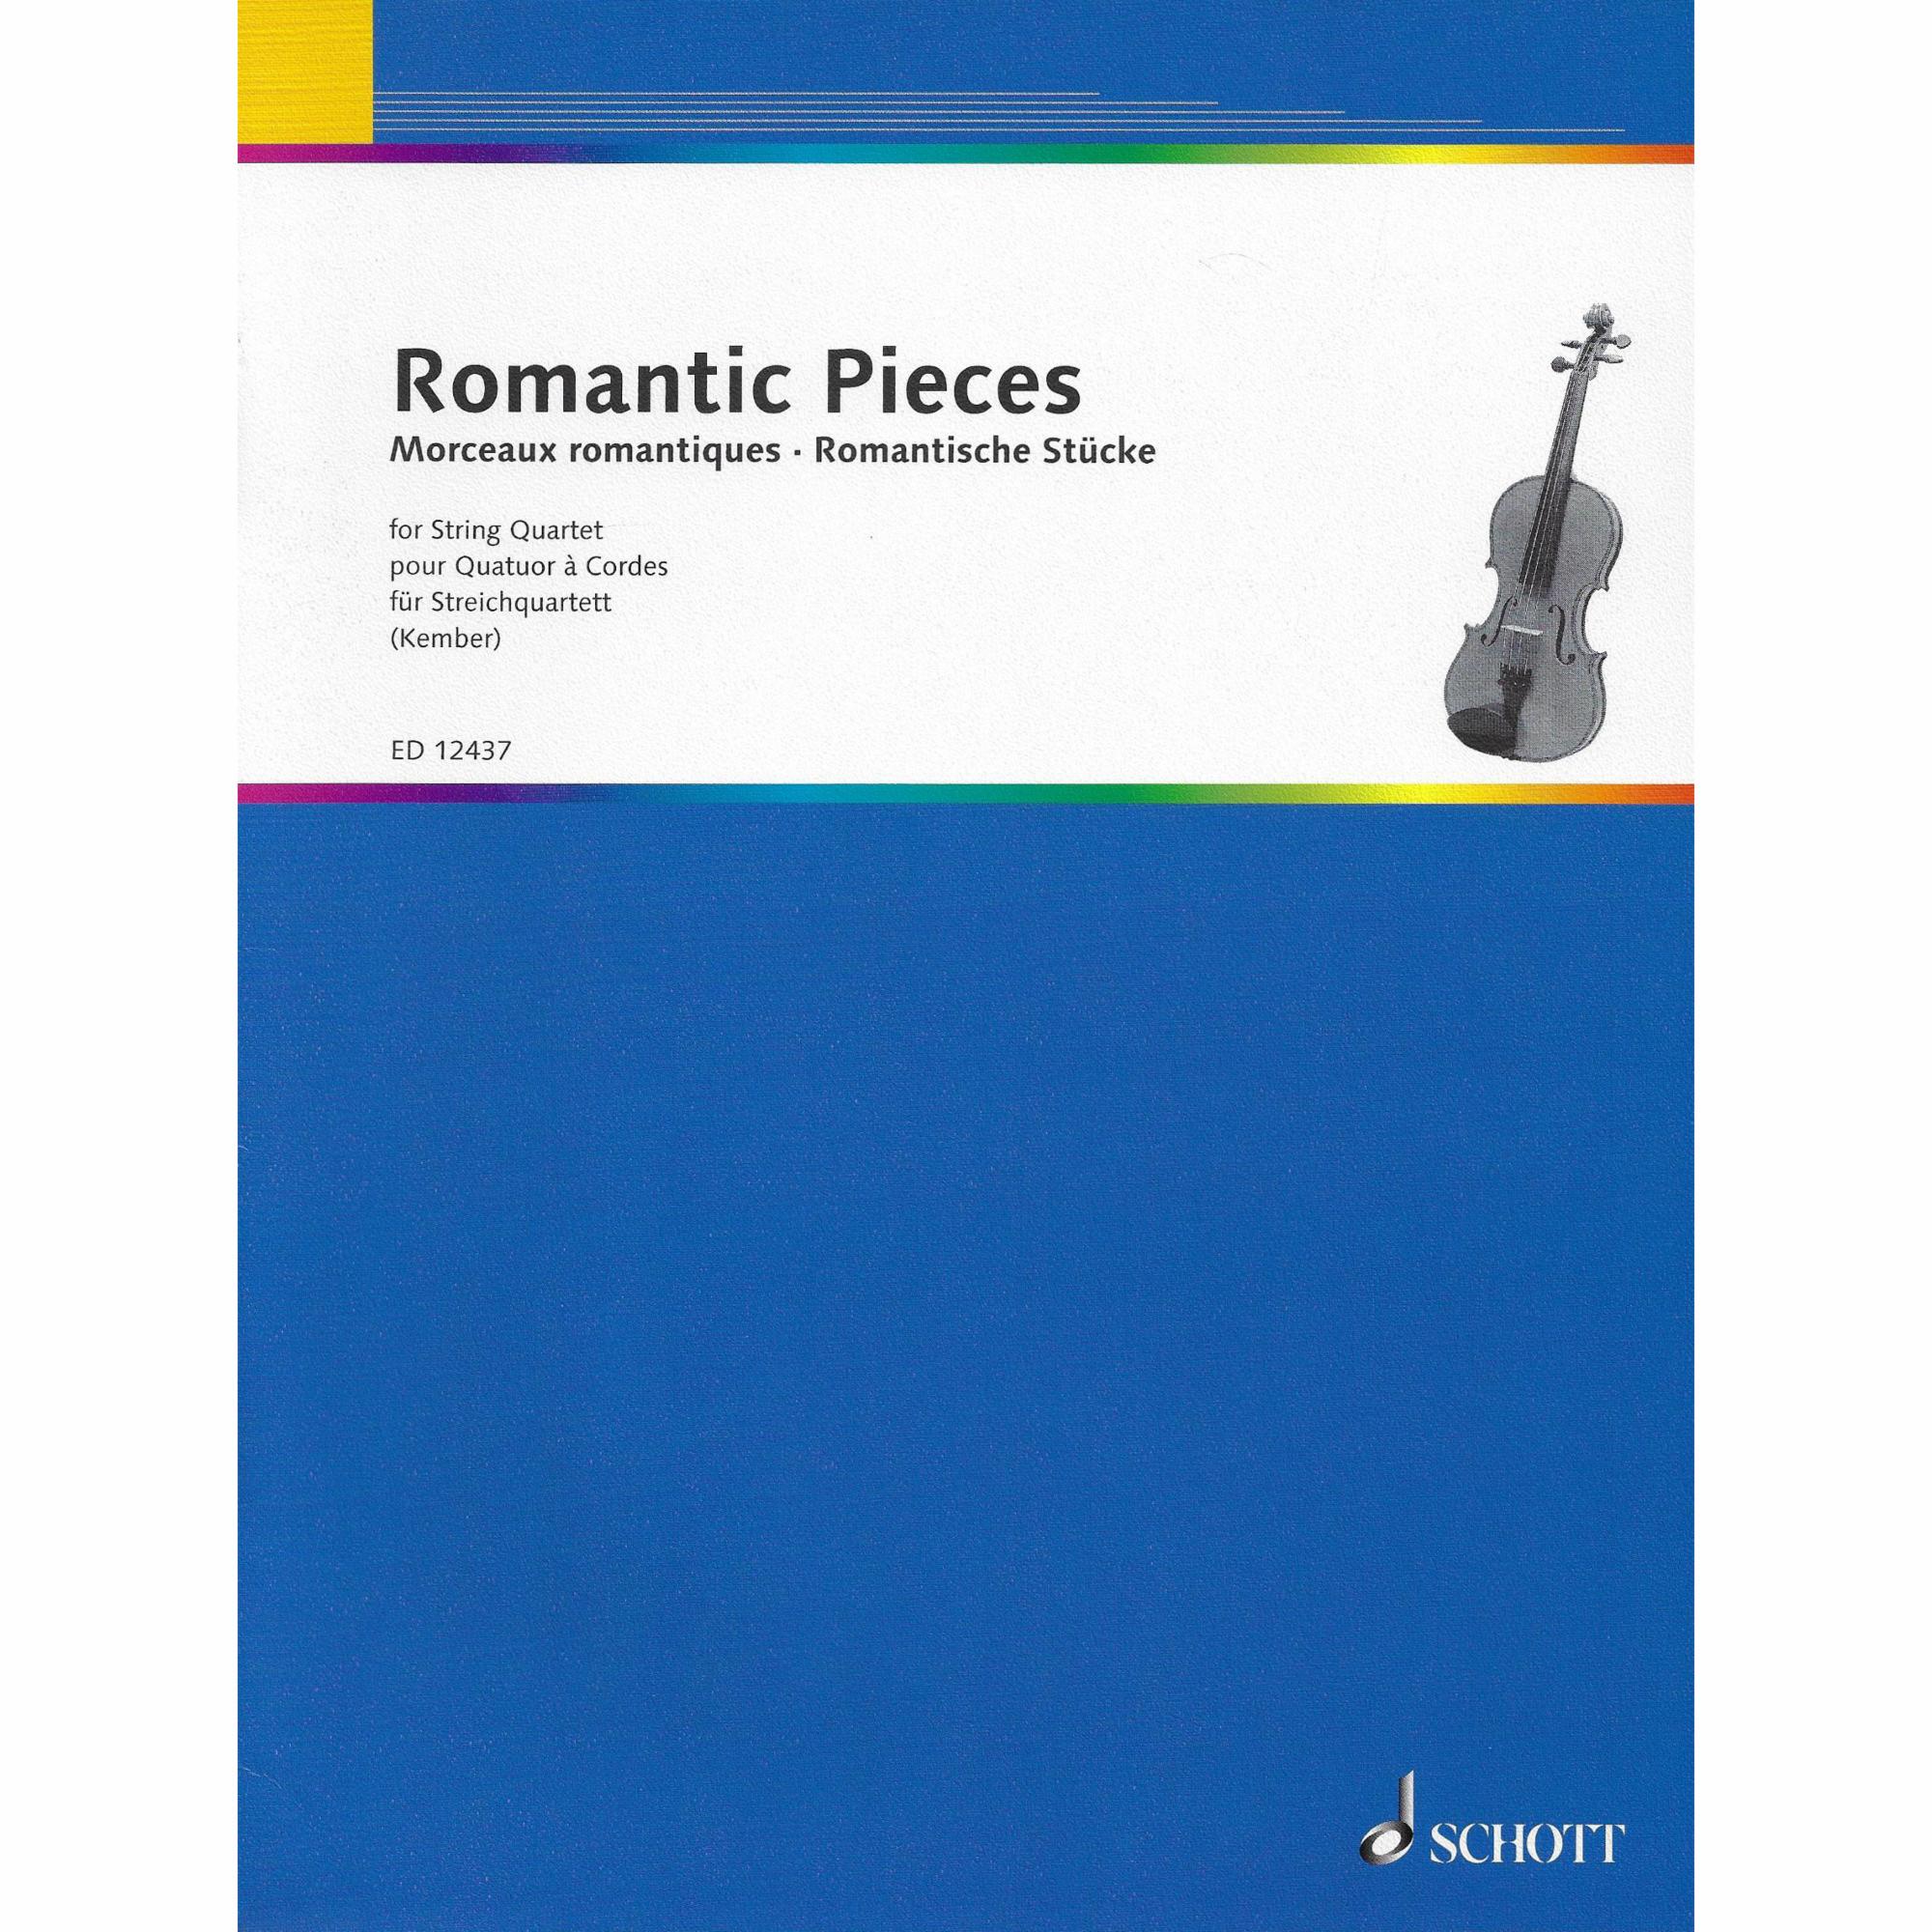 Romantic Pieces for String Quartet